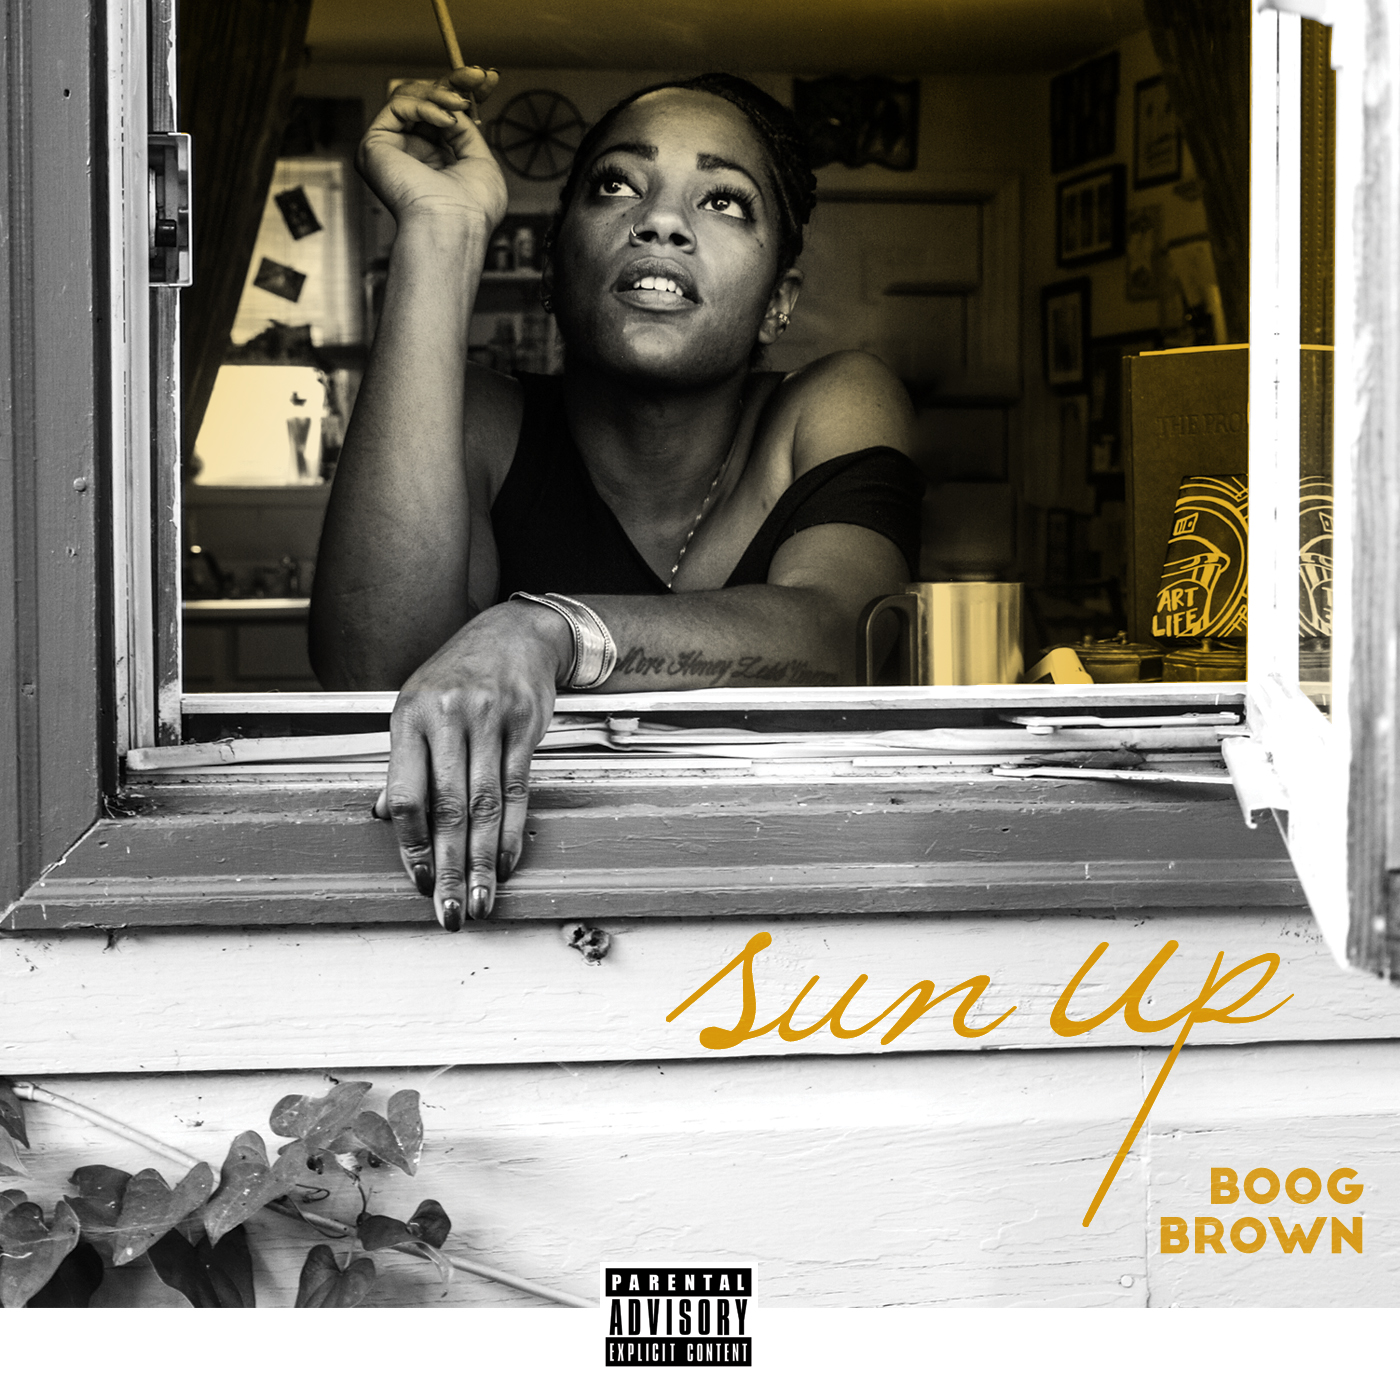 [SODD Premiere] Boog Brown’s “Sun Up” EP